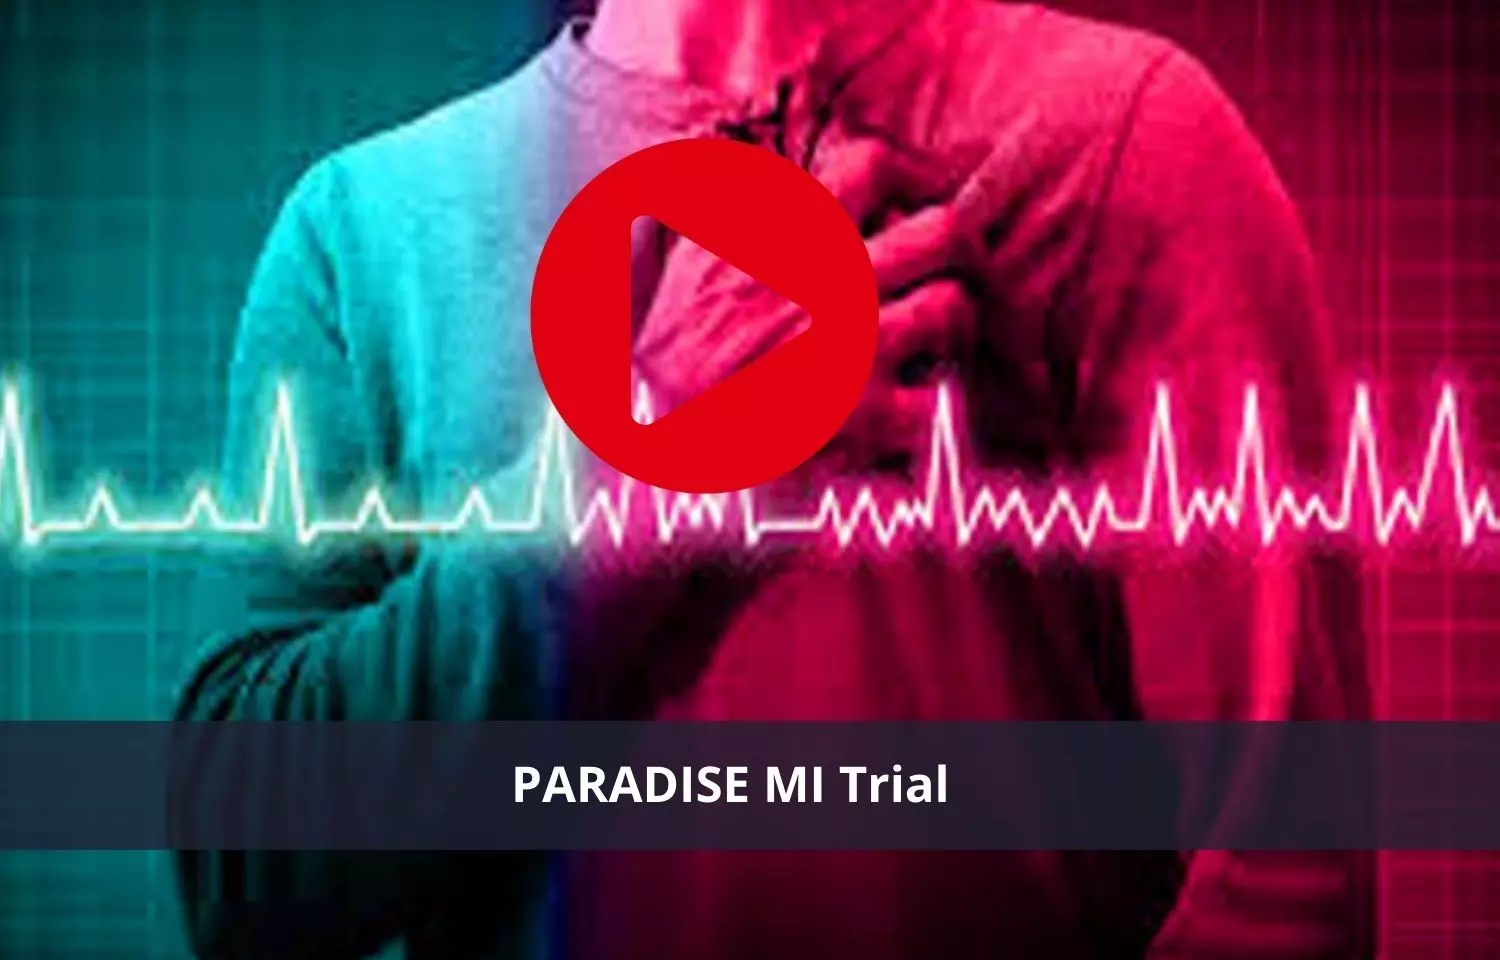 PARADISE MI Trial: sacubitril/valsartan effective for heart attack